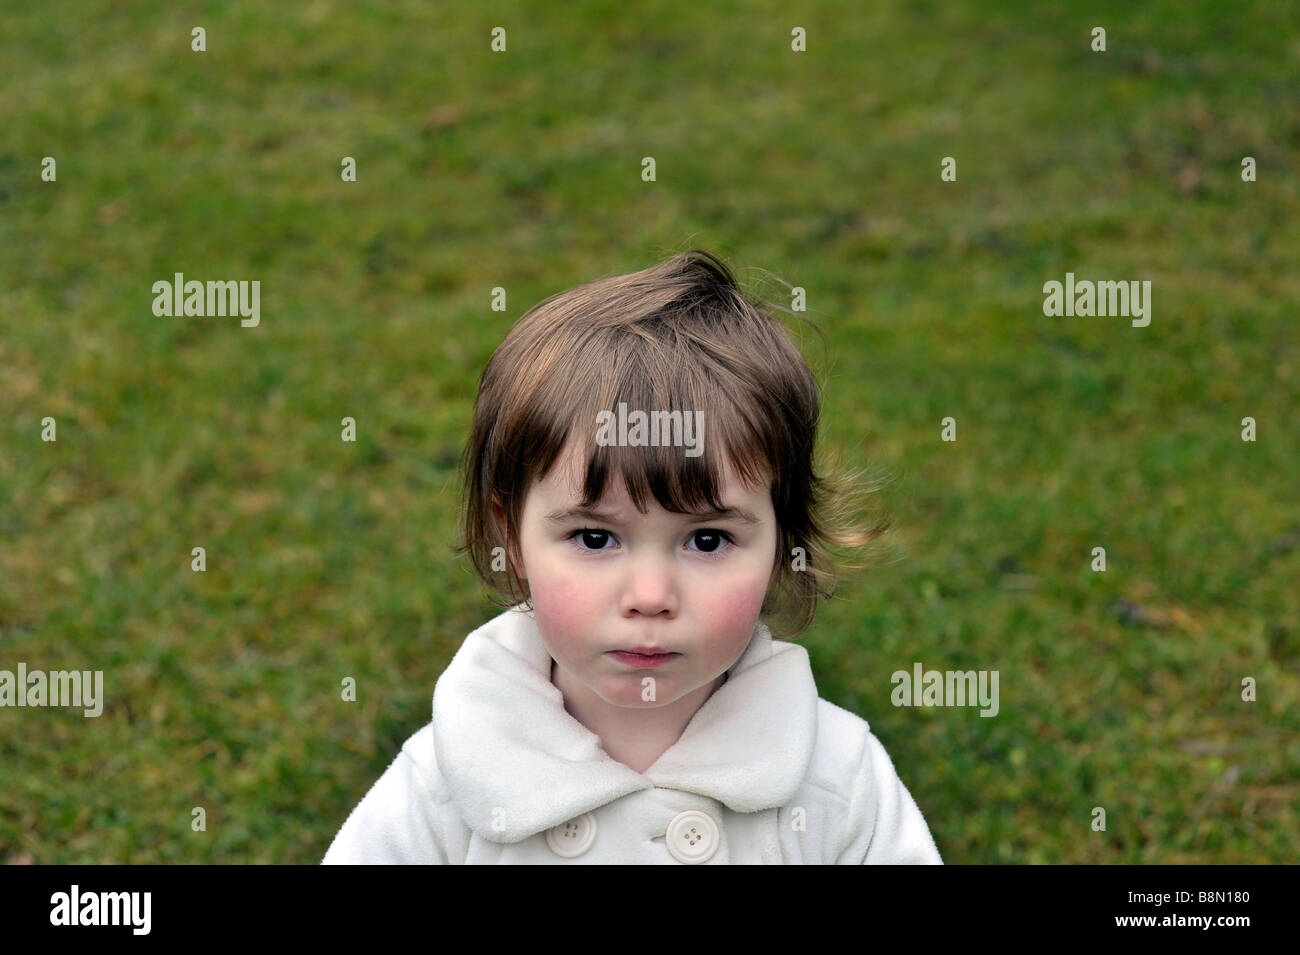 beautiful toddler girl portrait garden lawn Stock Photo